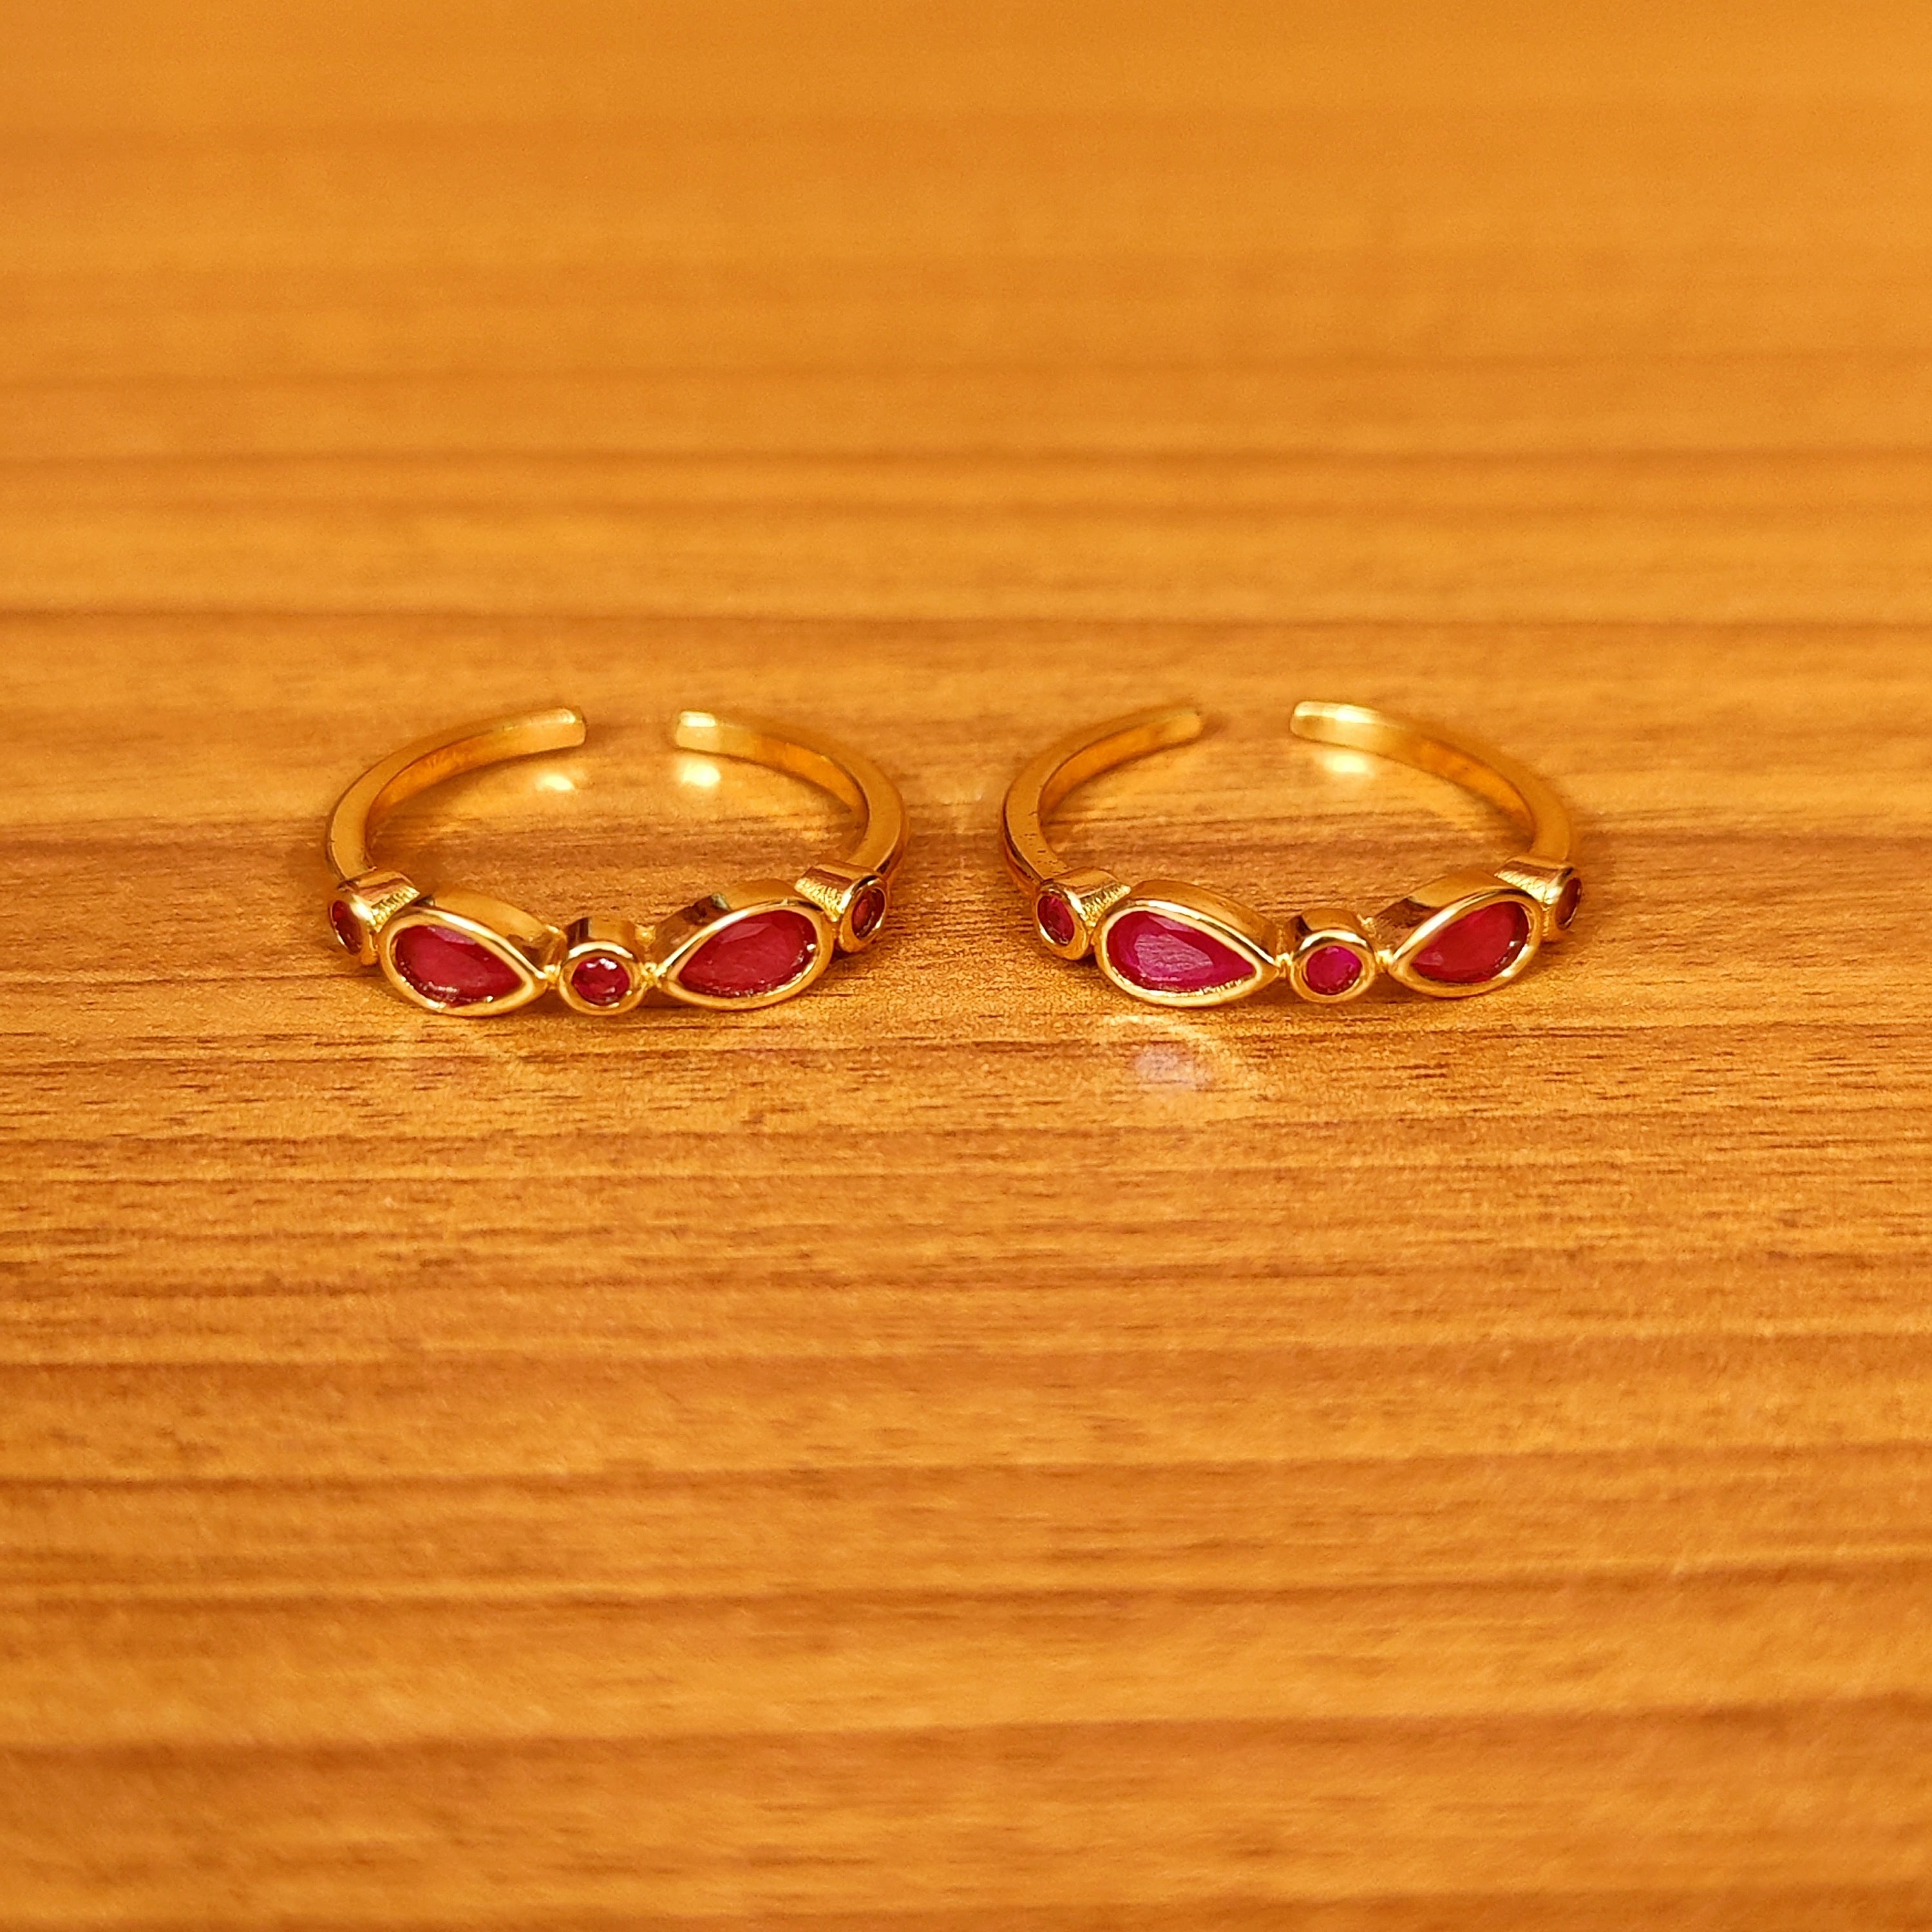 Buy Gold Jewellery Online | Beautiful Toe Ring Designs